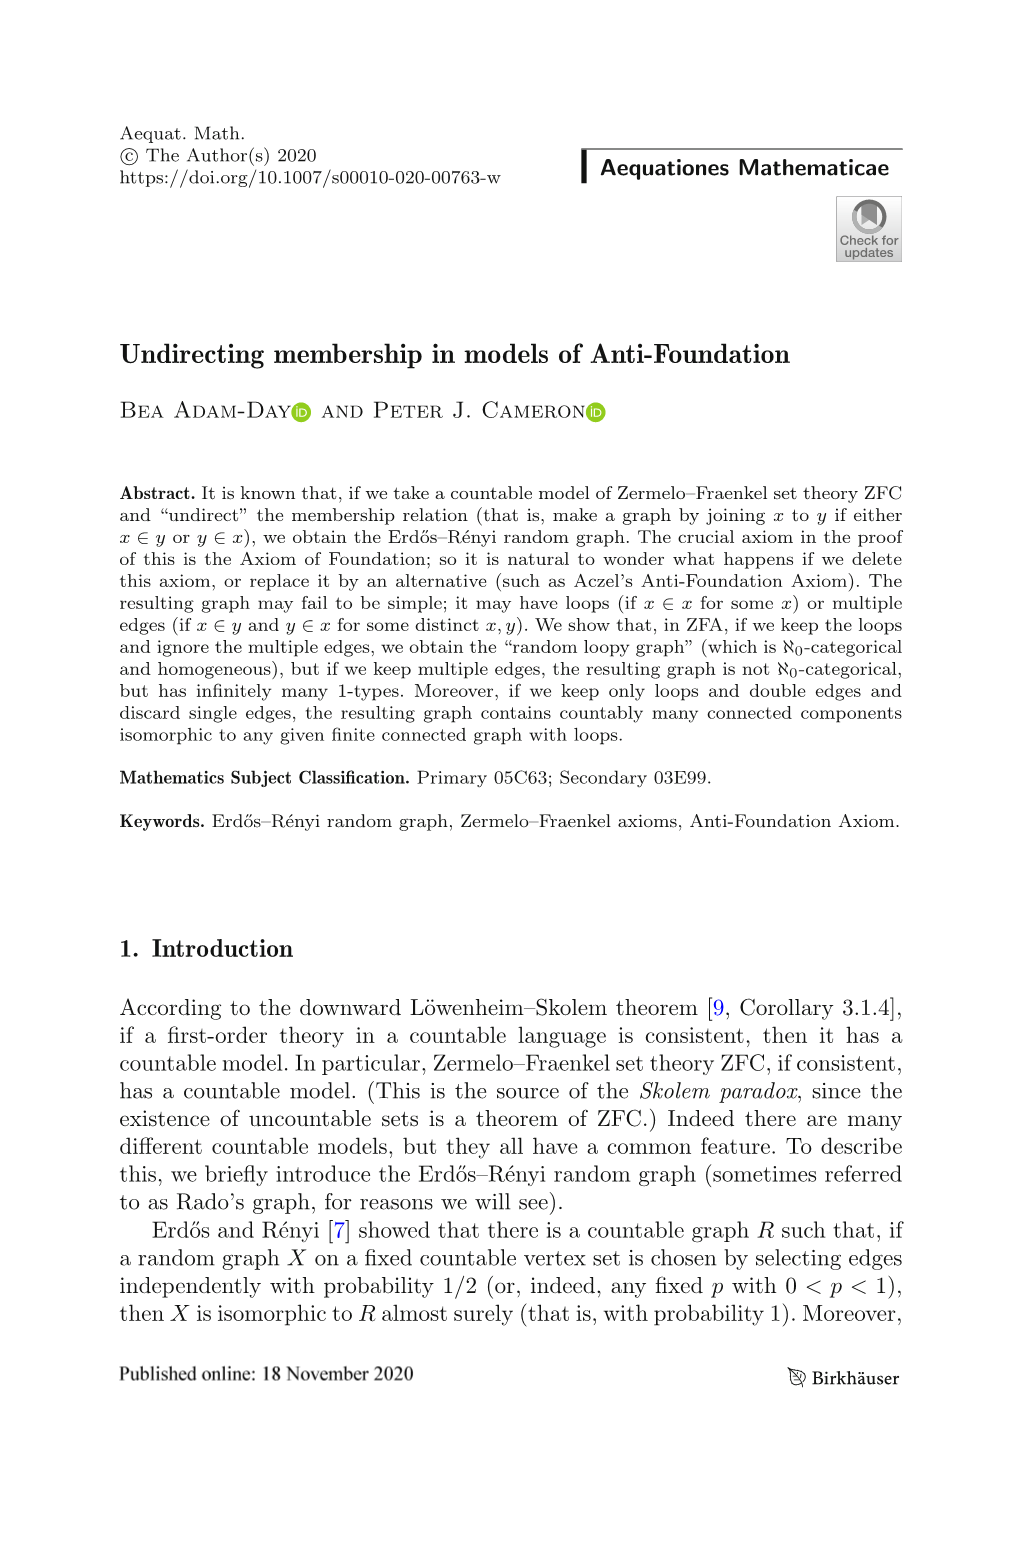 Undirecting Membership in Models of Anti-Foundation